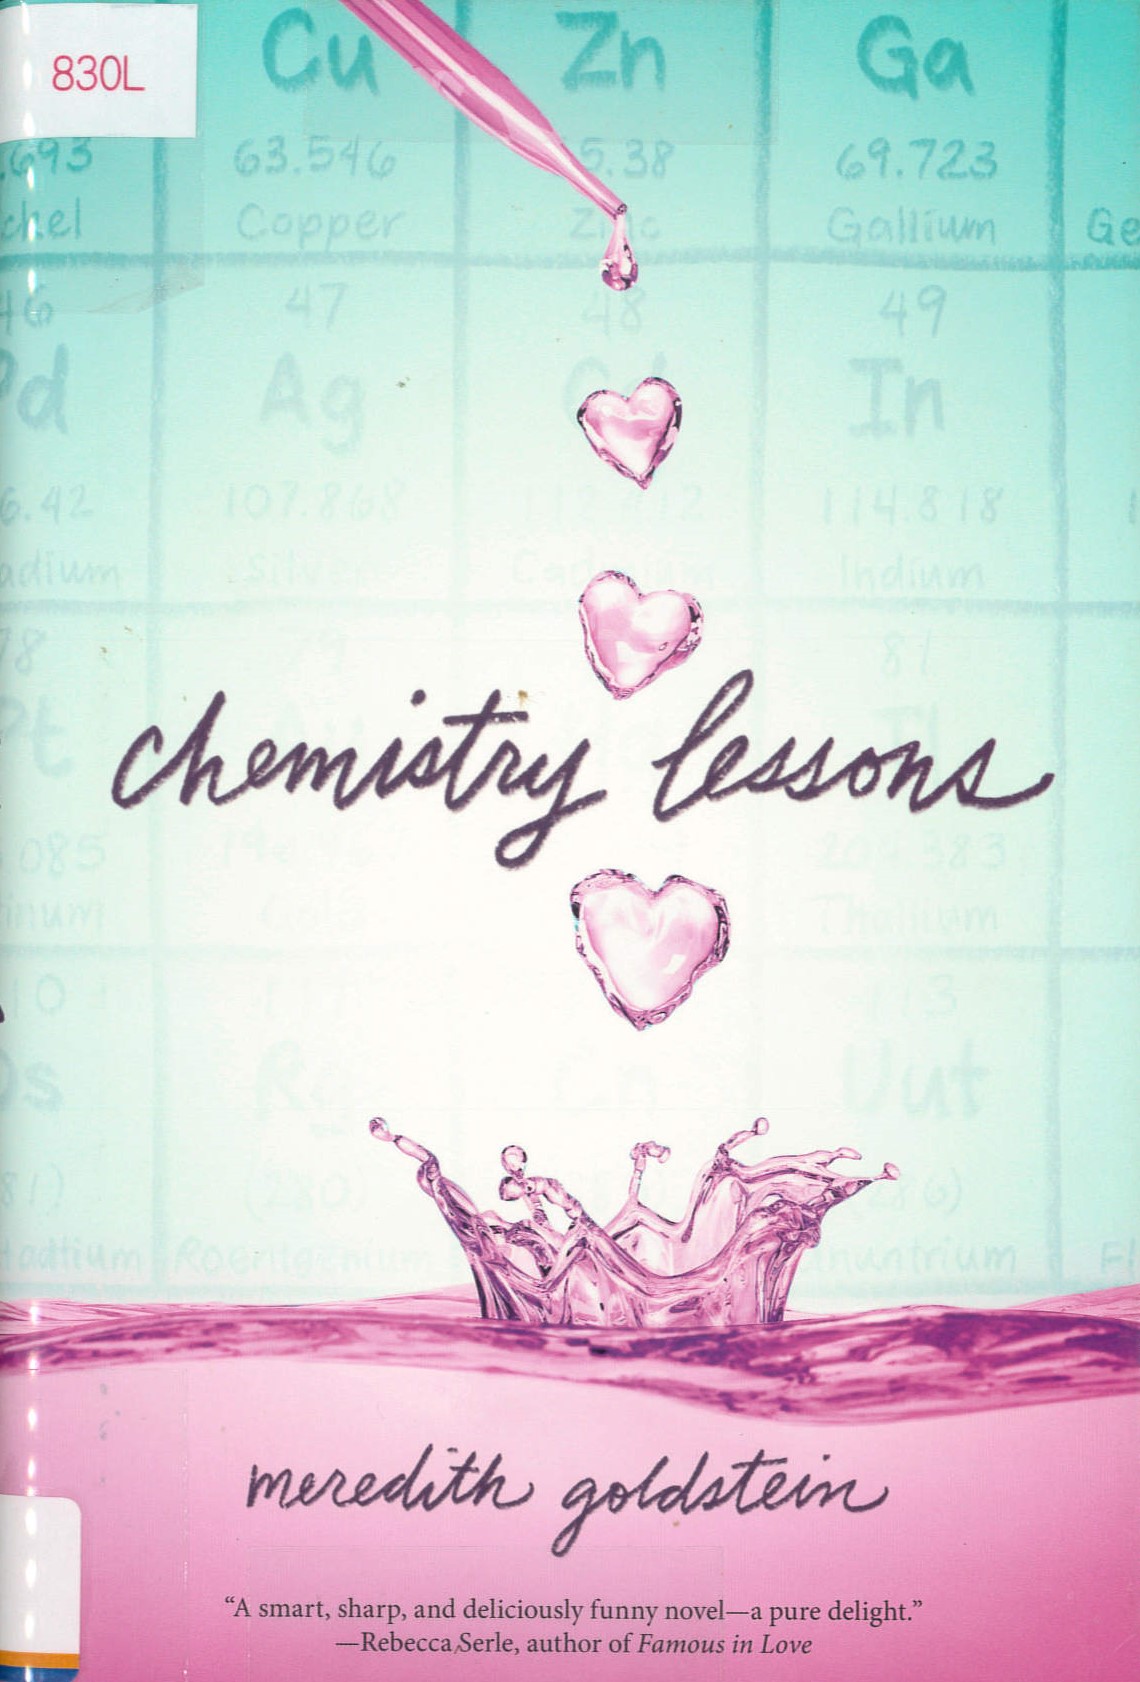 Chemistry lessons /